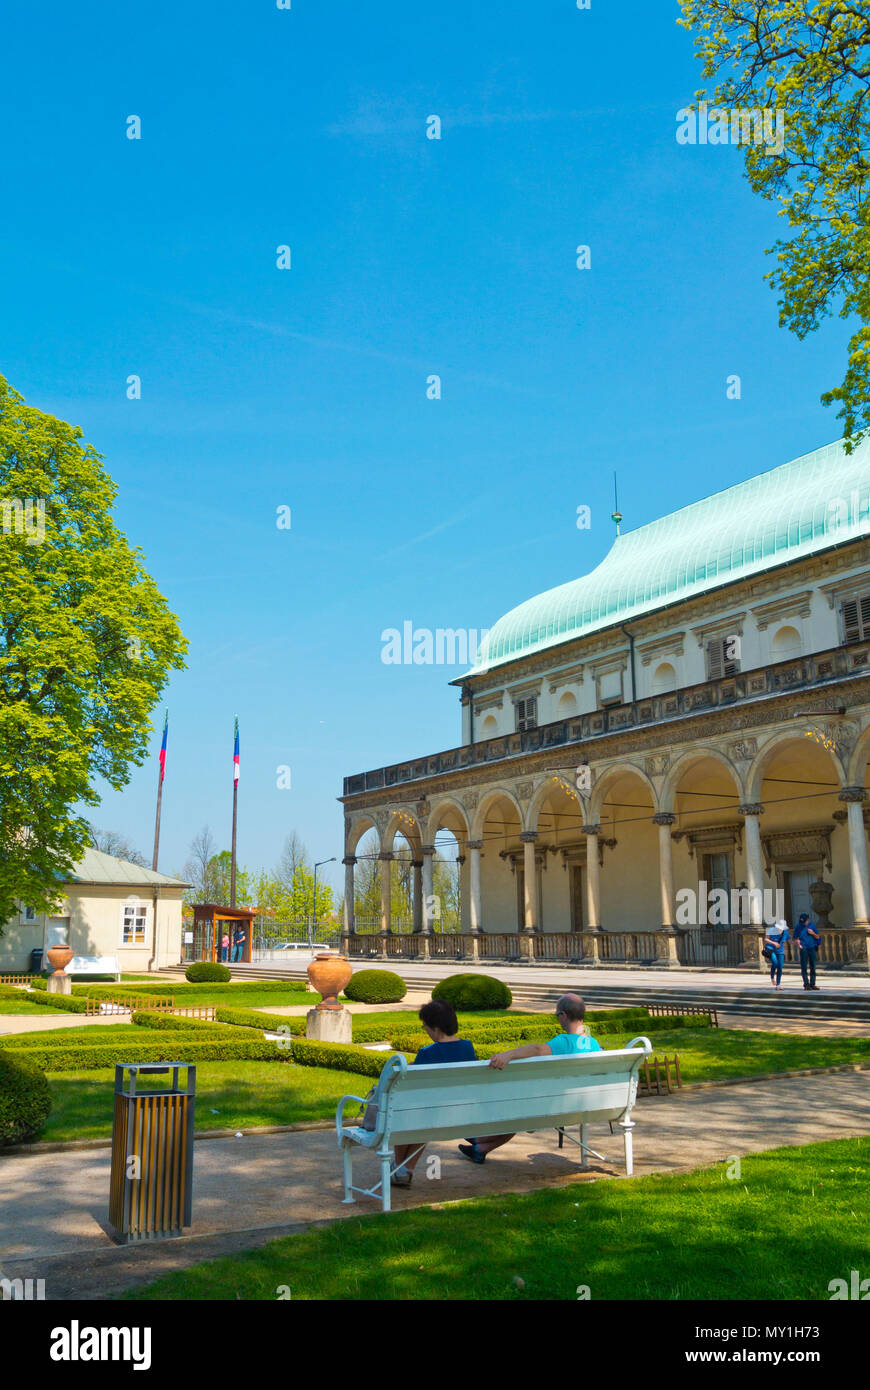 Kralovska zahrada, royal gardens, with Belvedere summer palace, Hradcany, Prague, Czech Republic Stock Photo